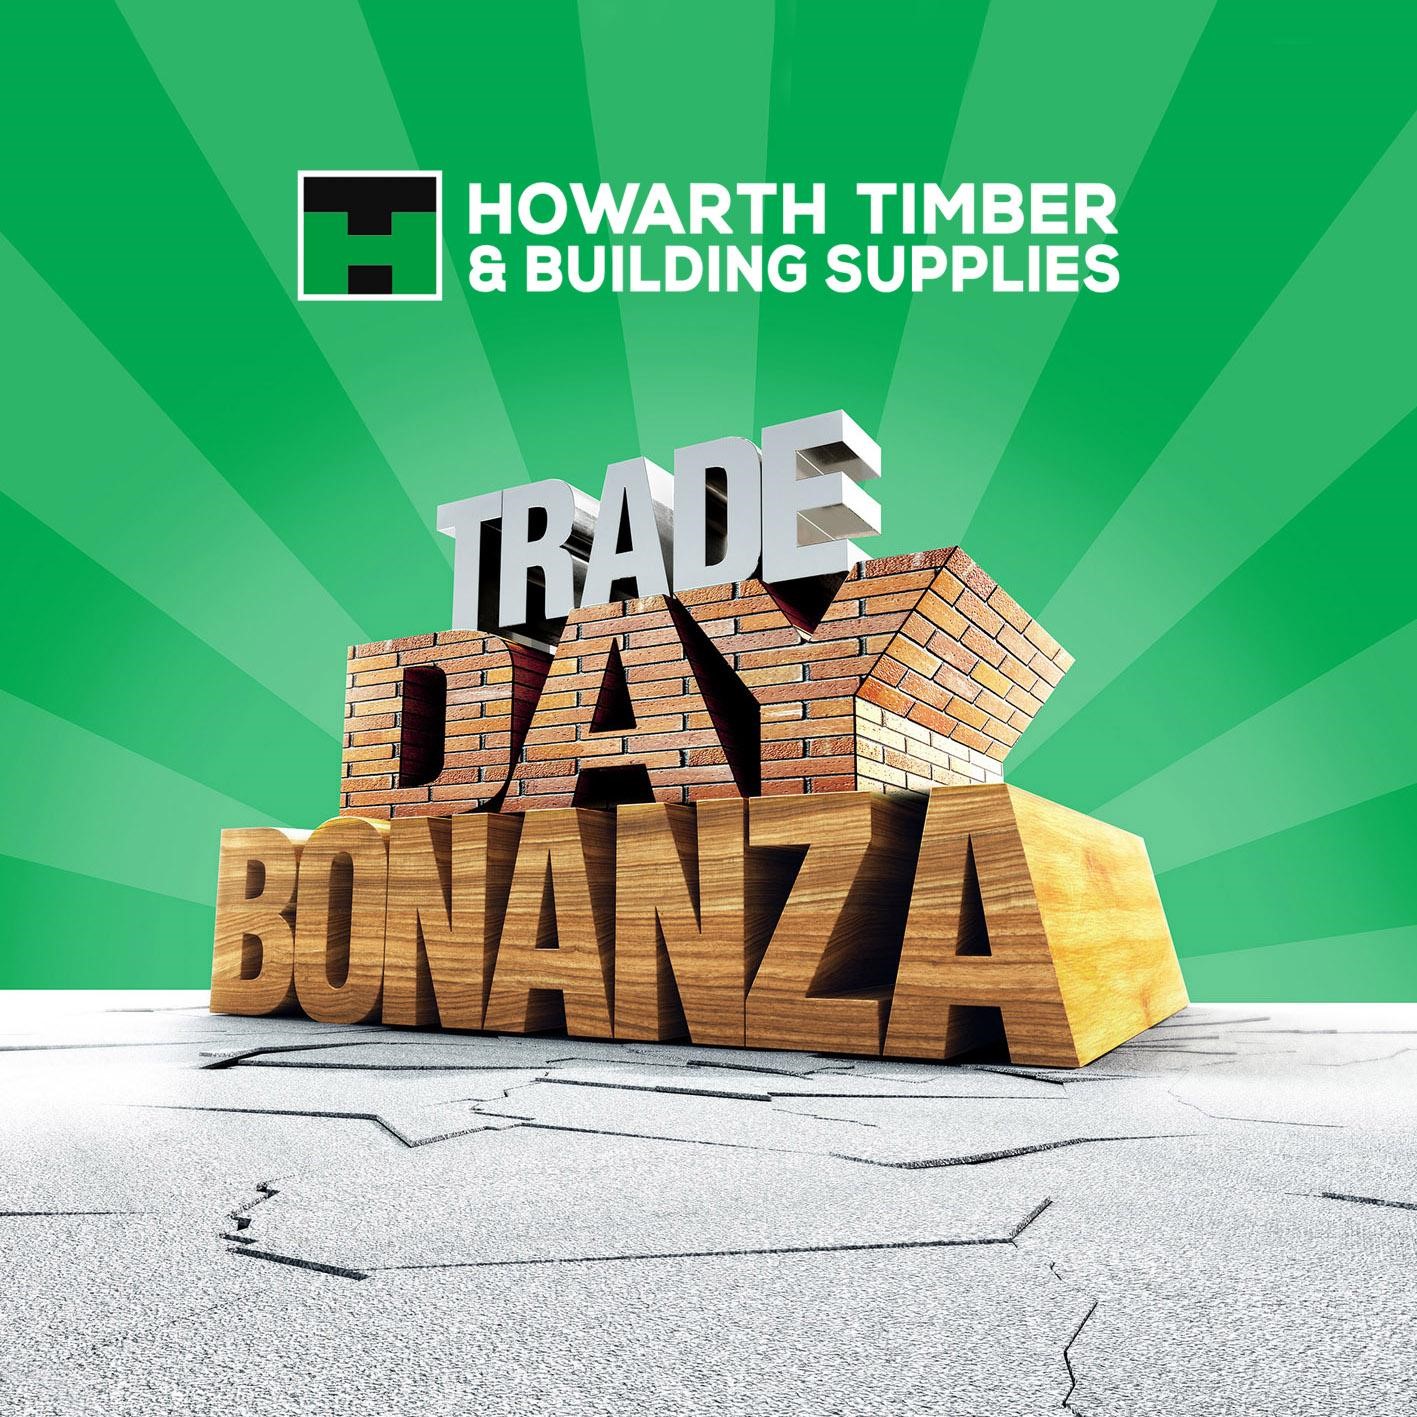 Howarth Timber & Building Supplies Trade Day Bonanza